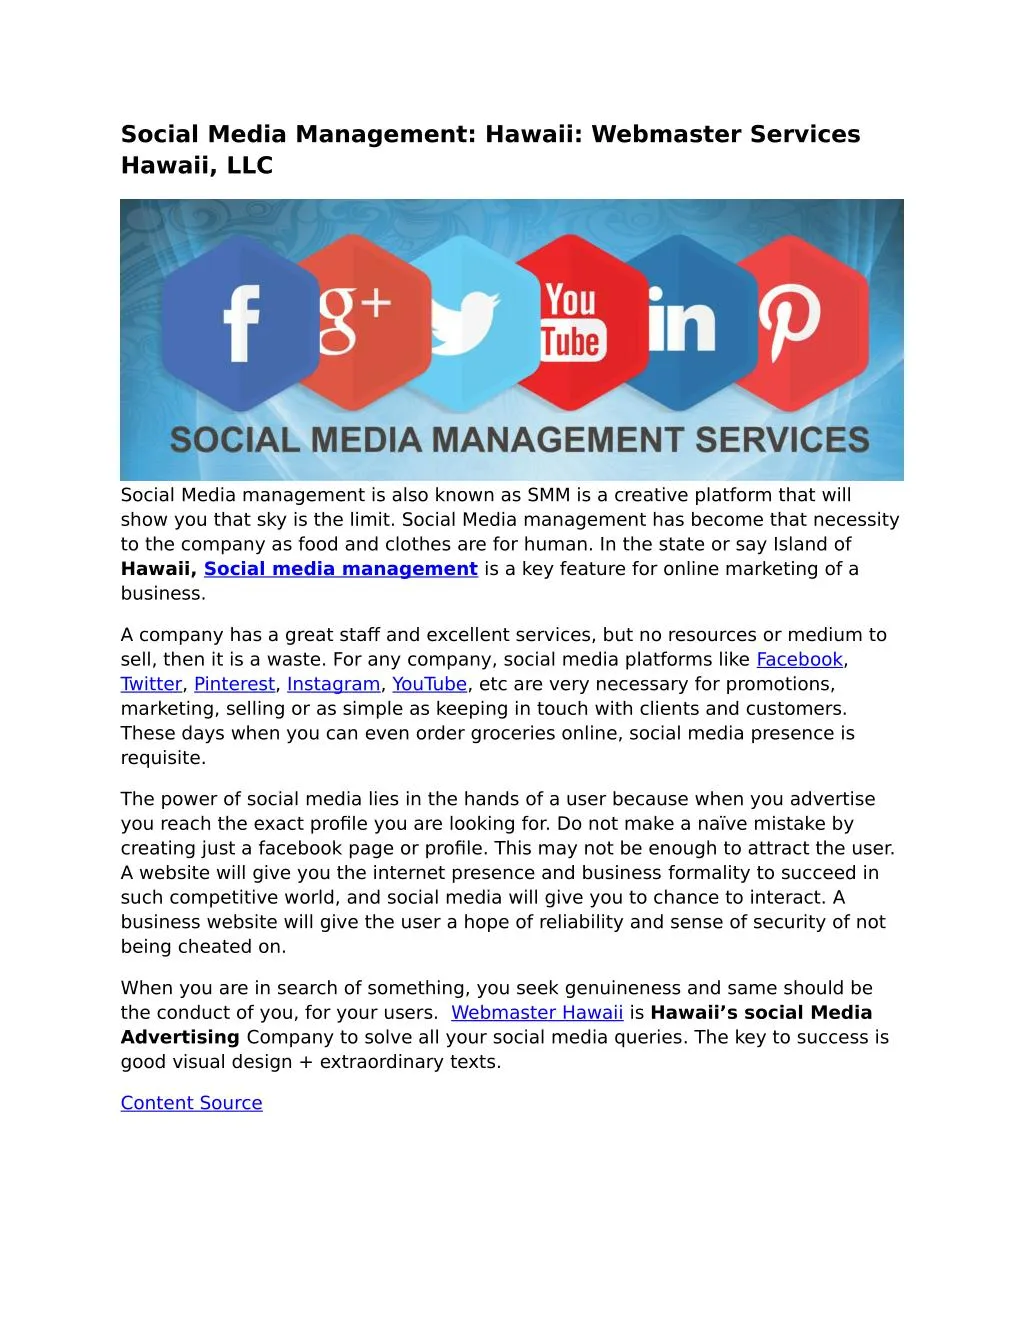 social media management hawaii webmaster services